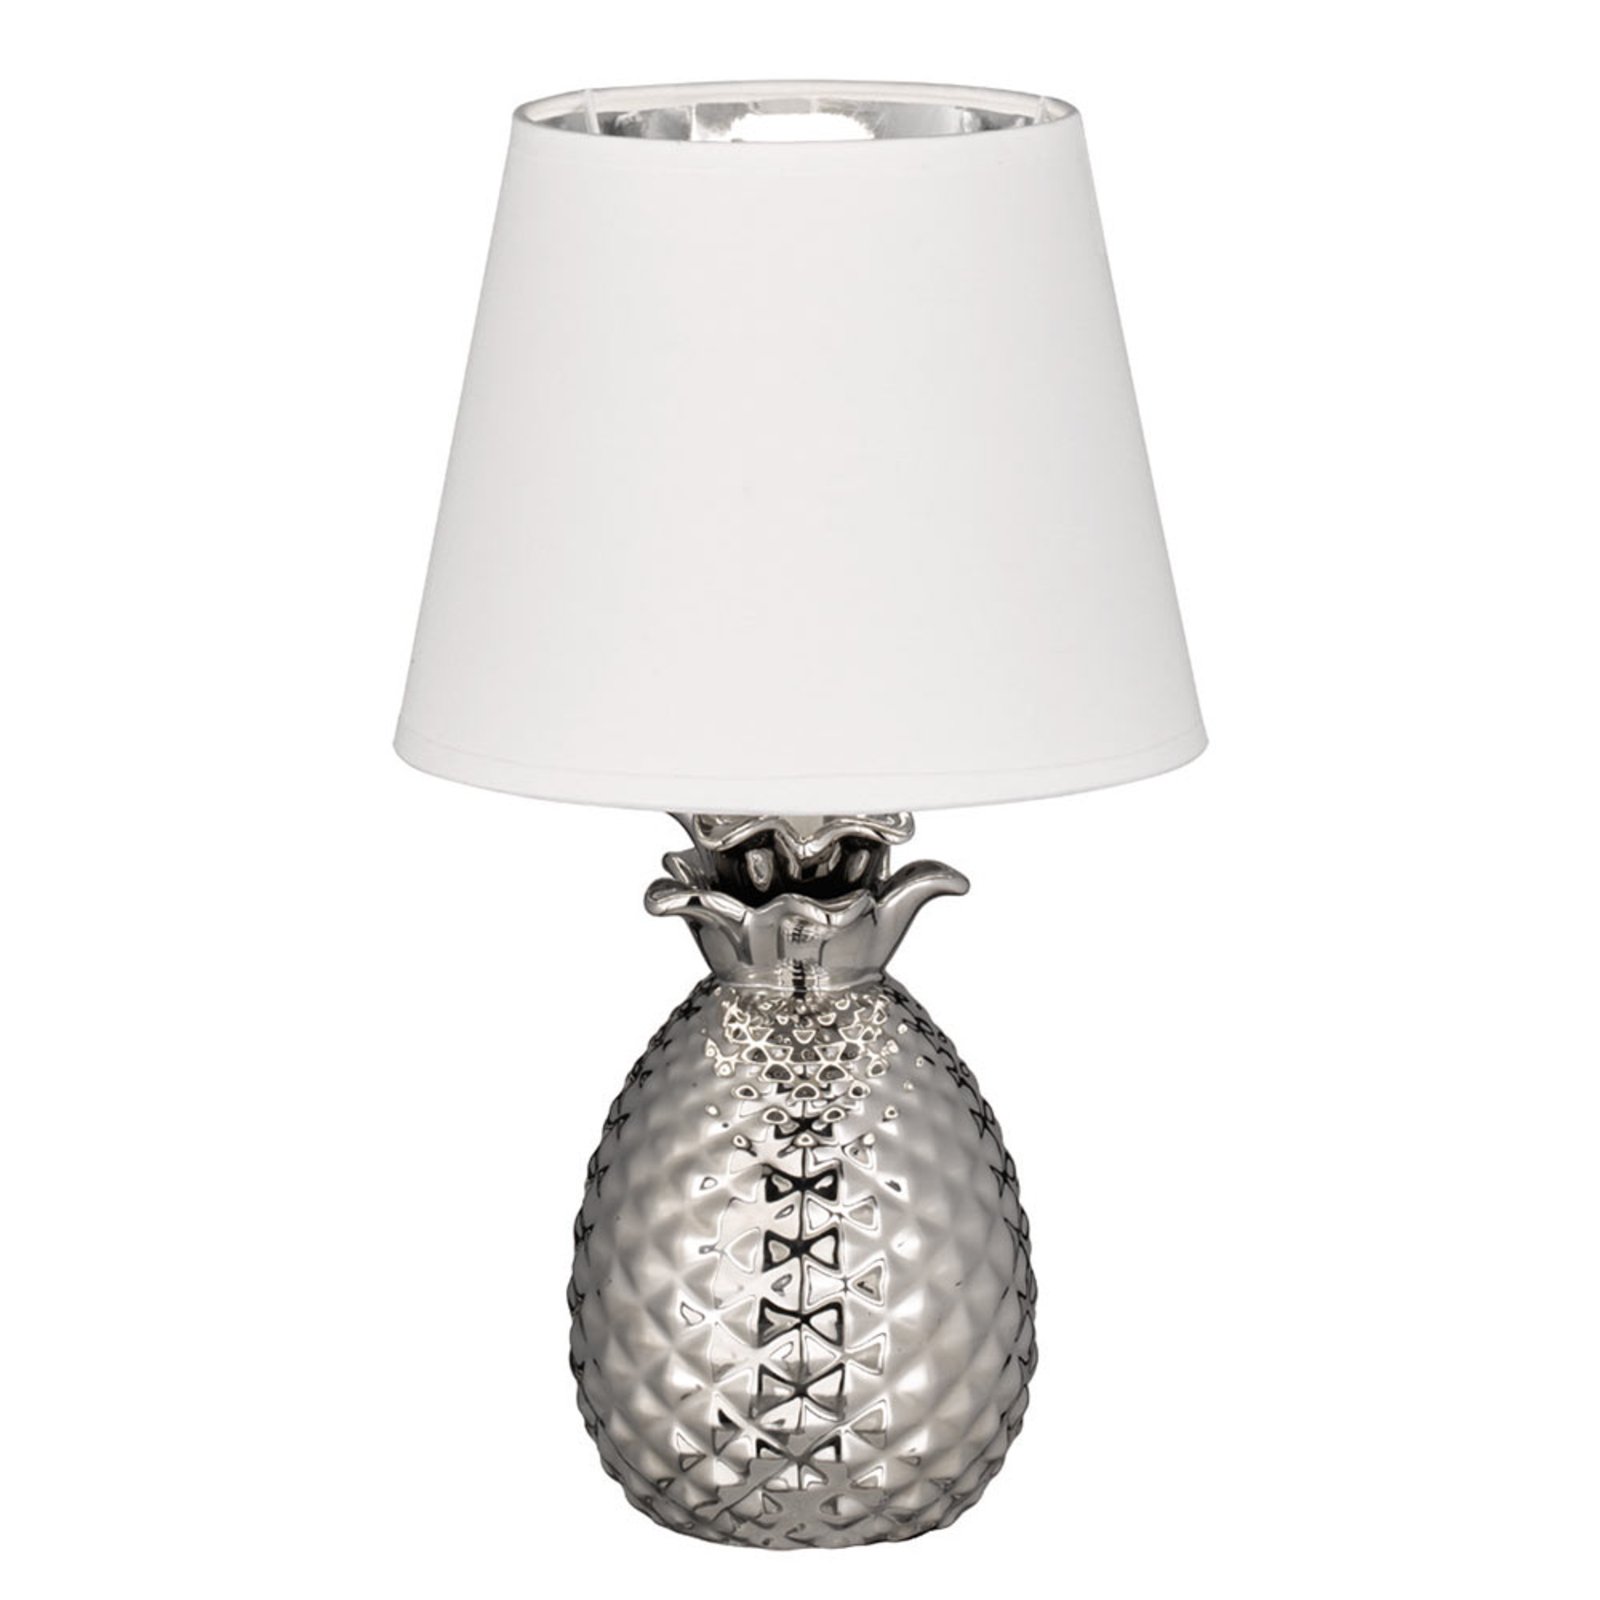 Decorative Pineapple ceramic table lamp, silver